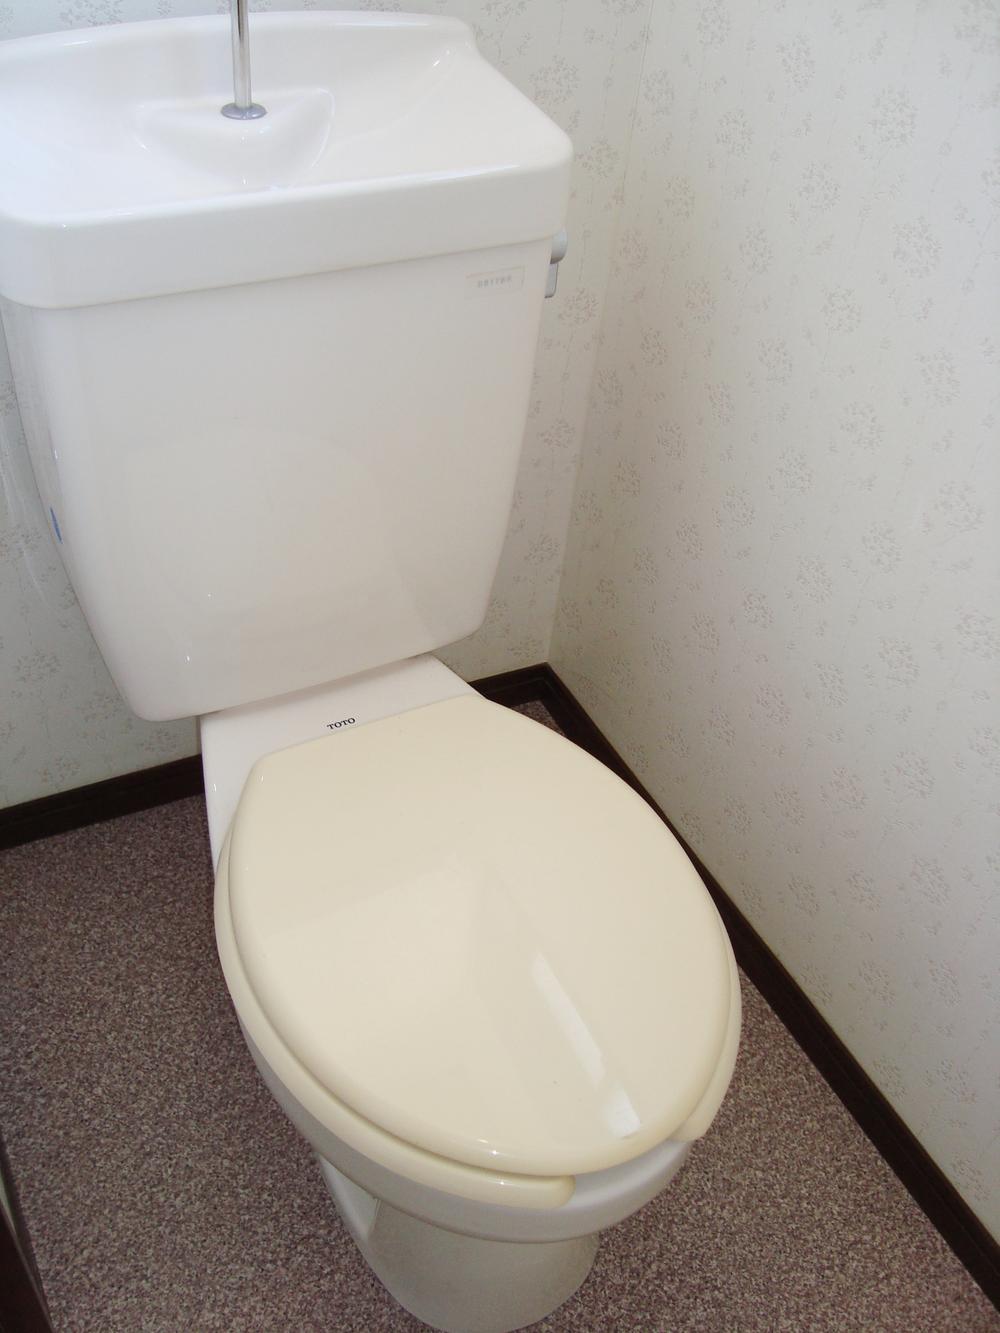 Toilet. Renovation completed * toilet seat exchange